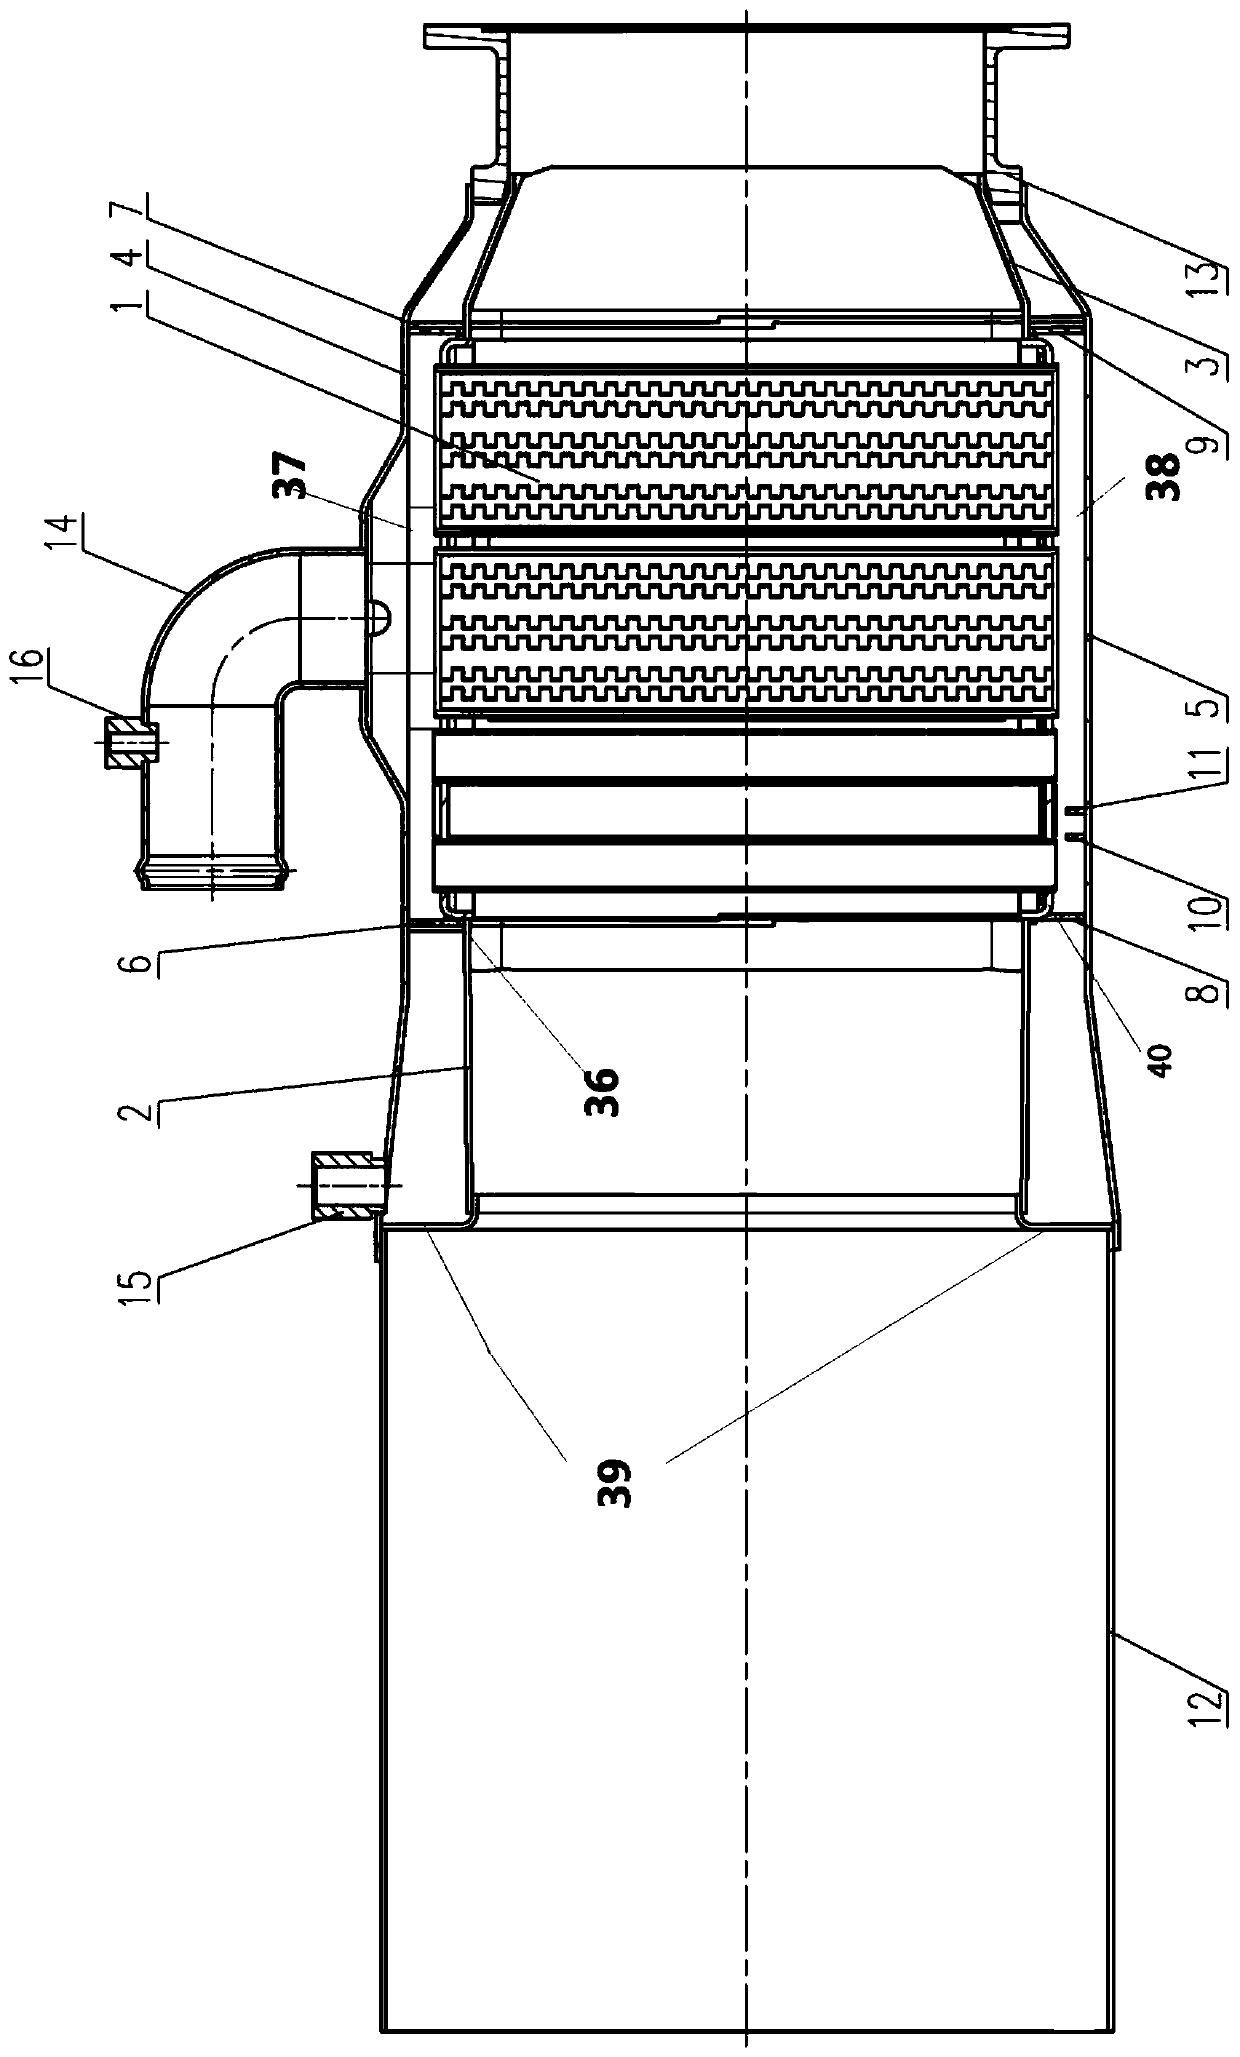 Design method for diameter of flat tubes of heat exchange device for combustion waste heat utilization